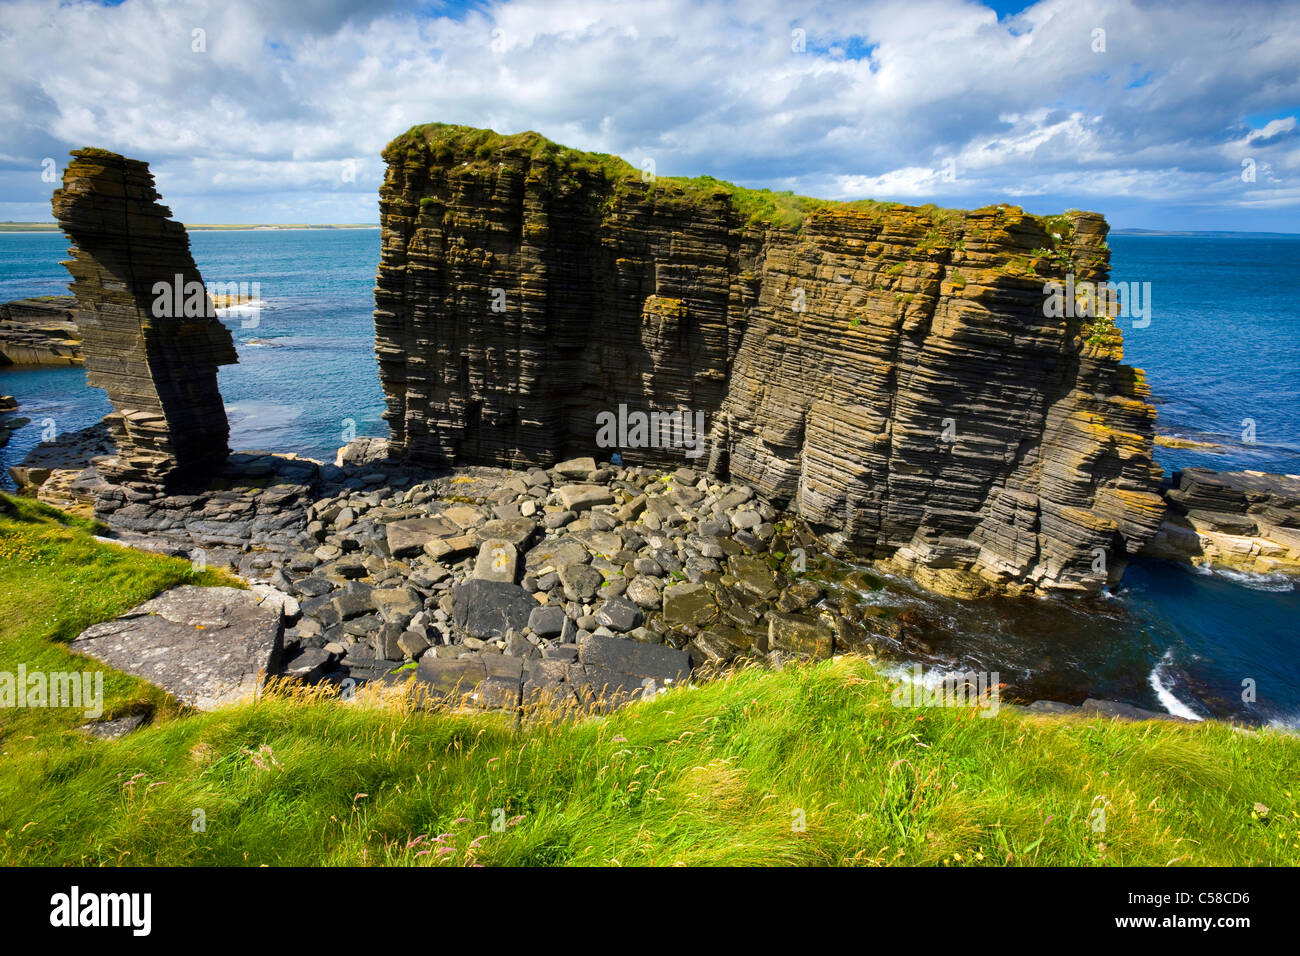 Noss Head, Great Britain, Scotland, Europe, sea, coast, rock, cliff, cliff tower, erosion, clouds Stock Photo